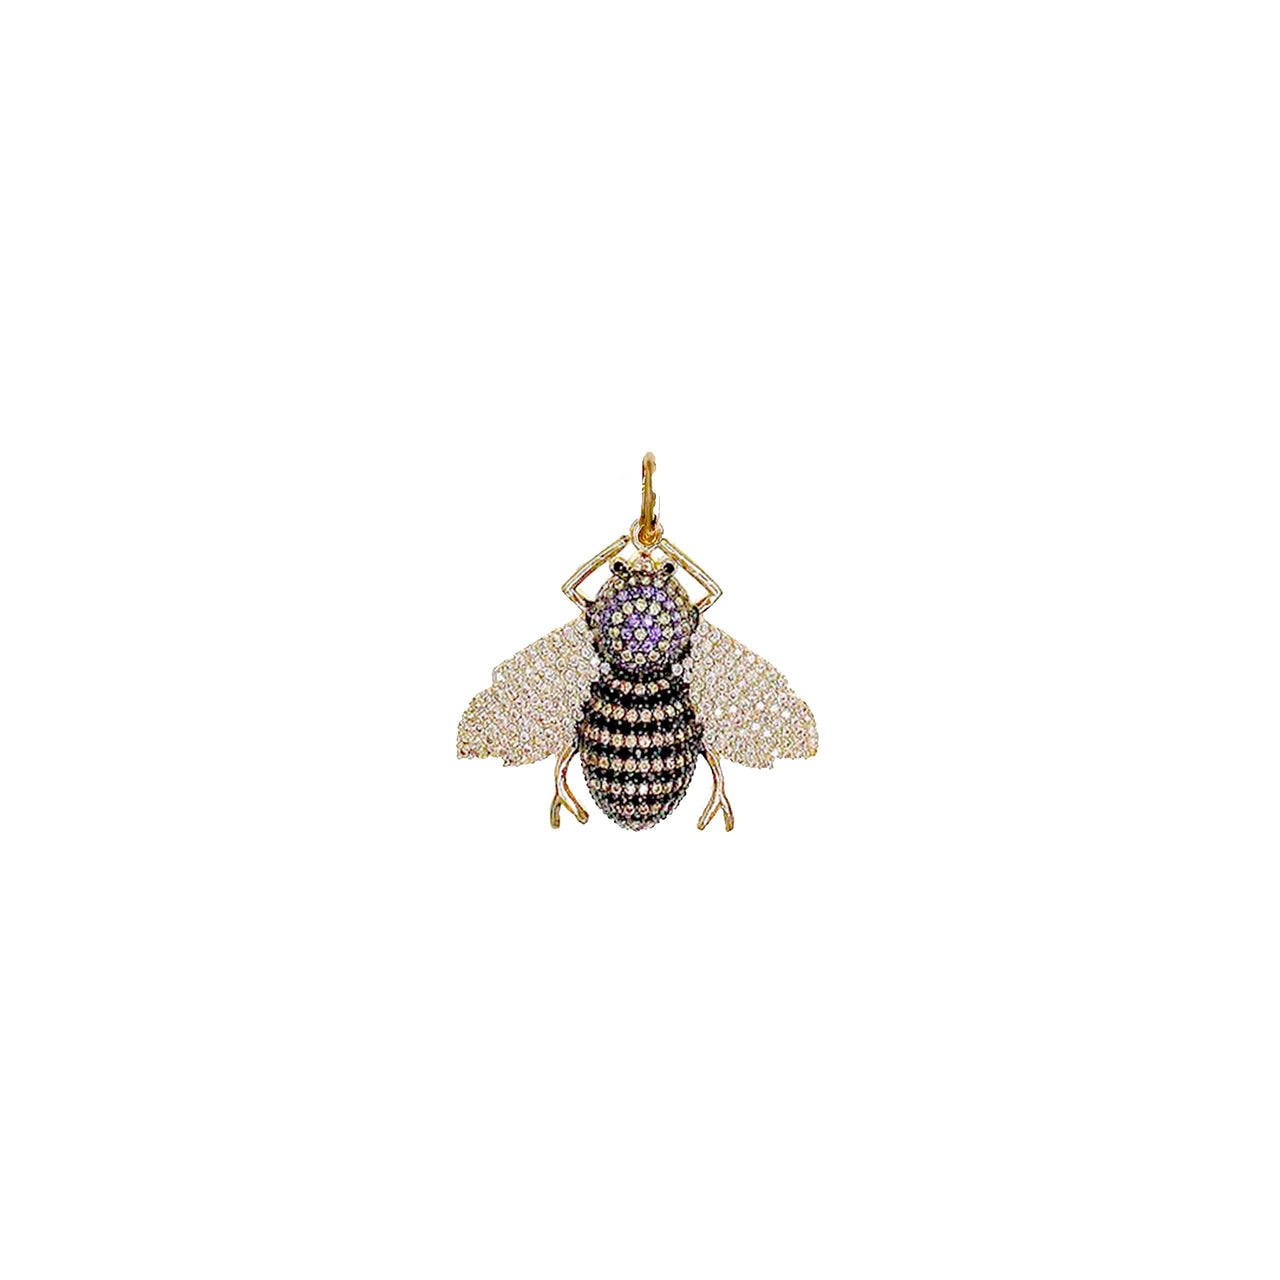 The Queen Bee Charm